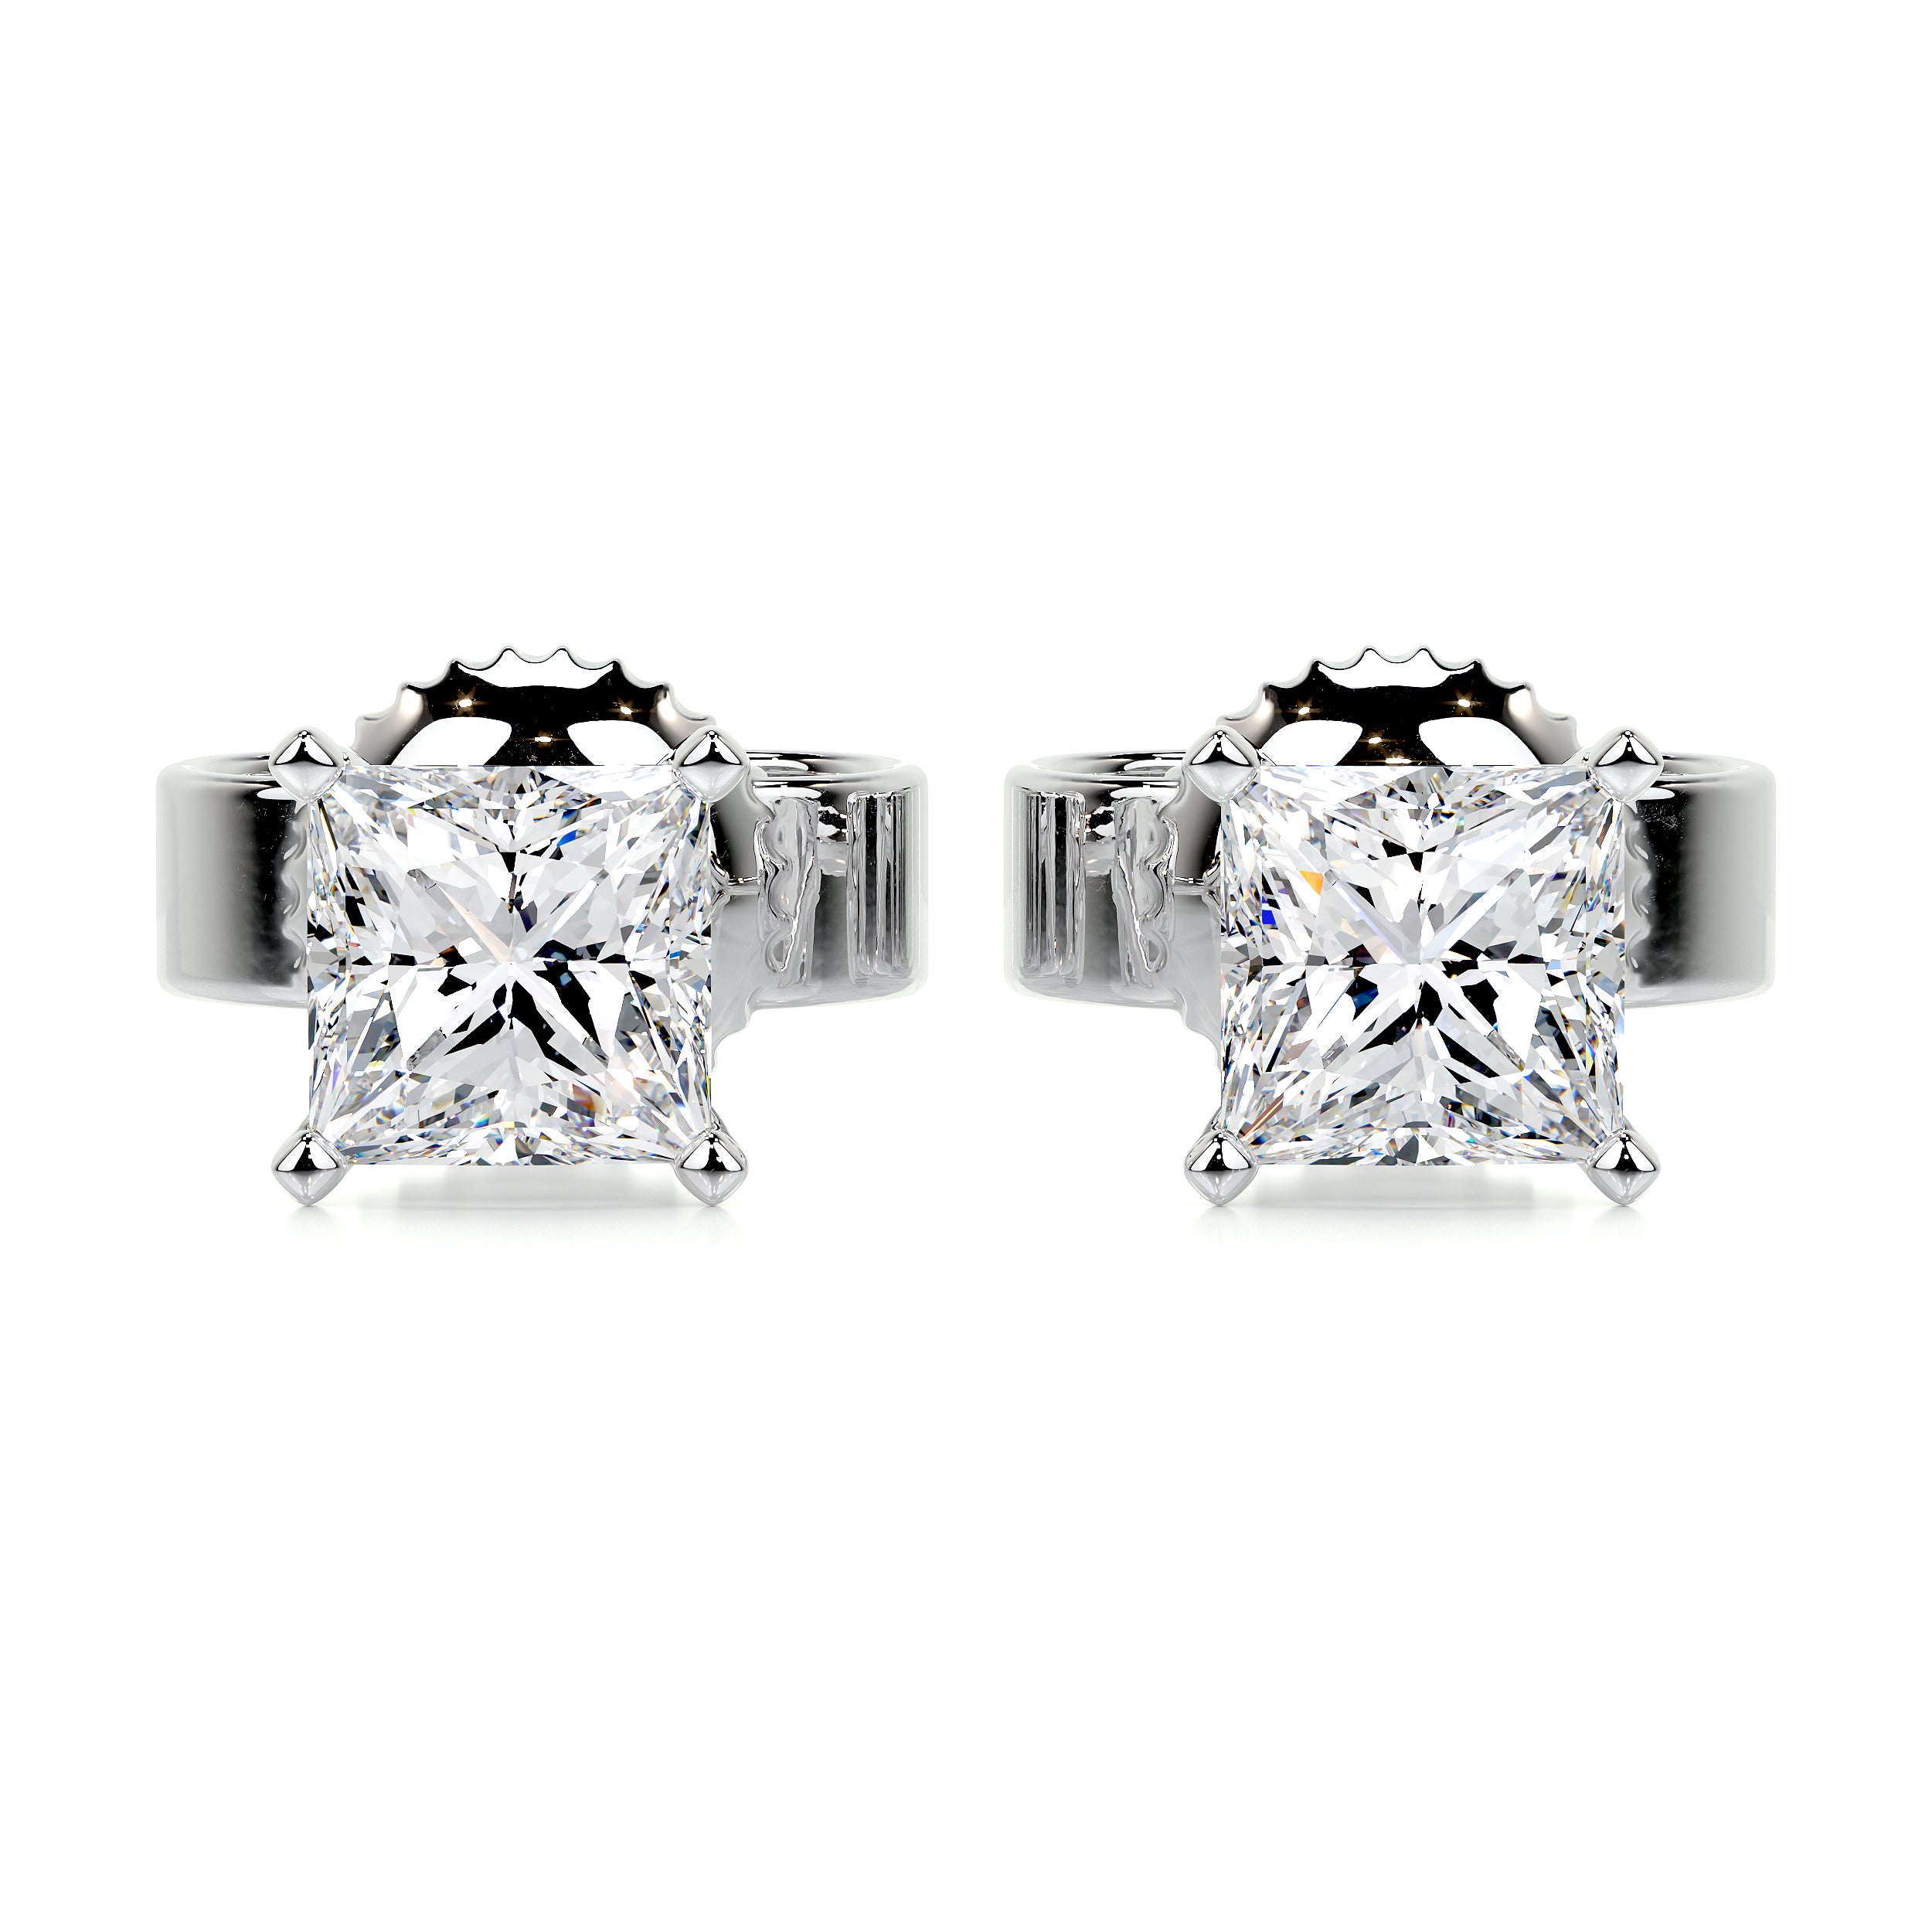 Jamie Diamond Earrings   (2 Carat) -14K White Gold